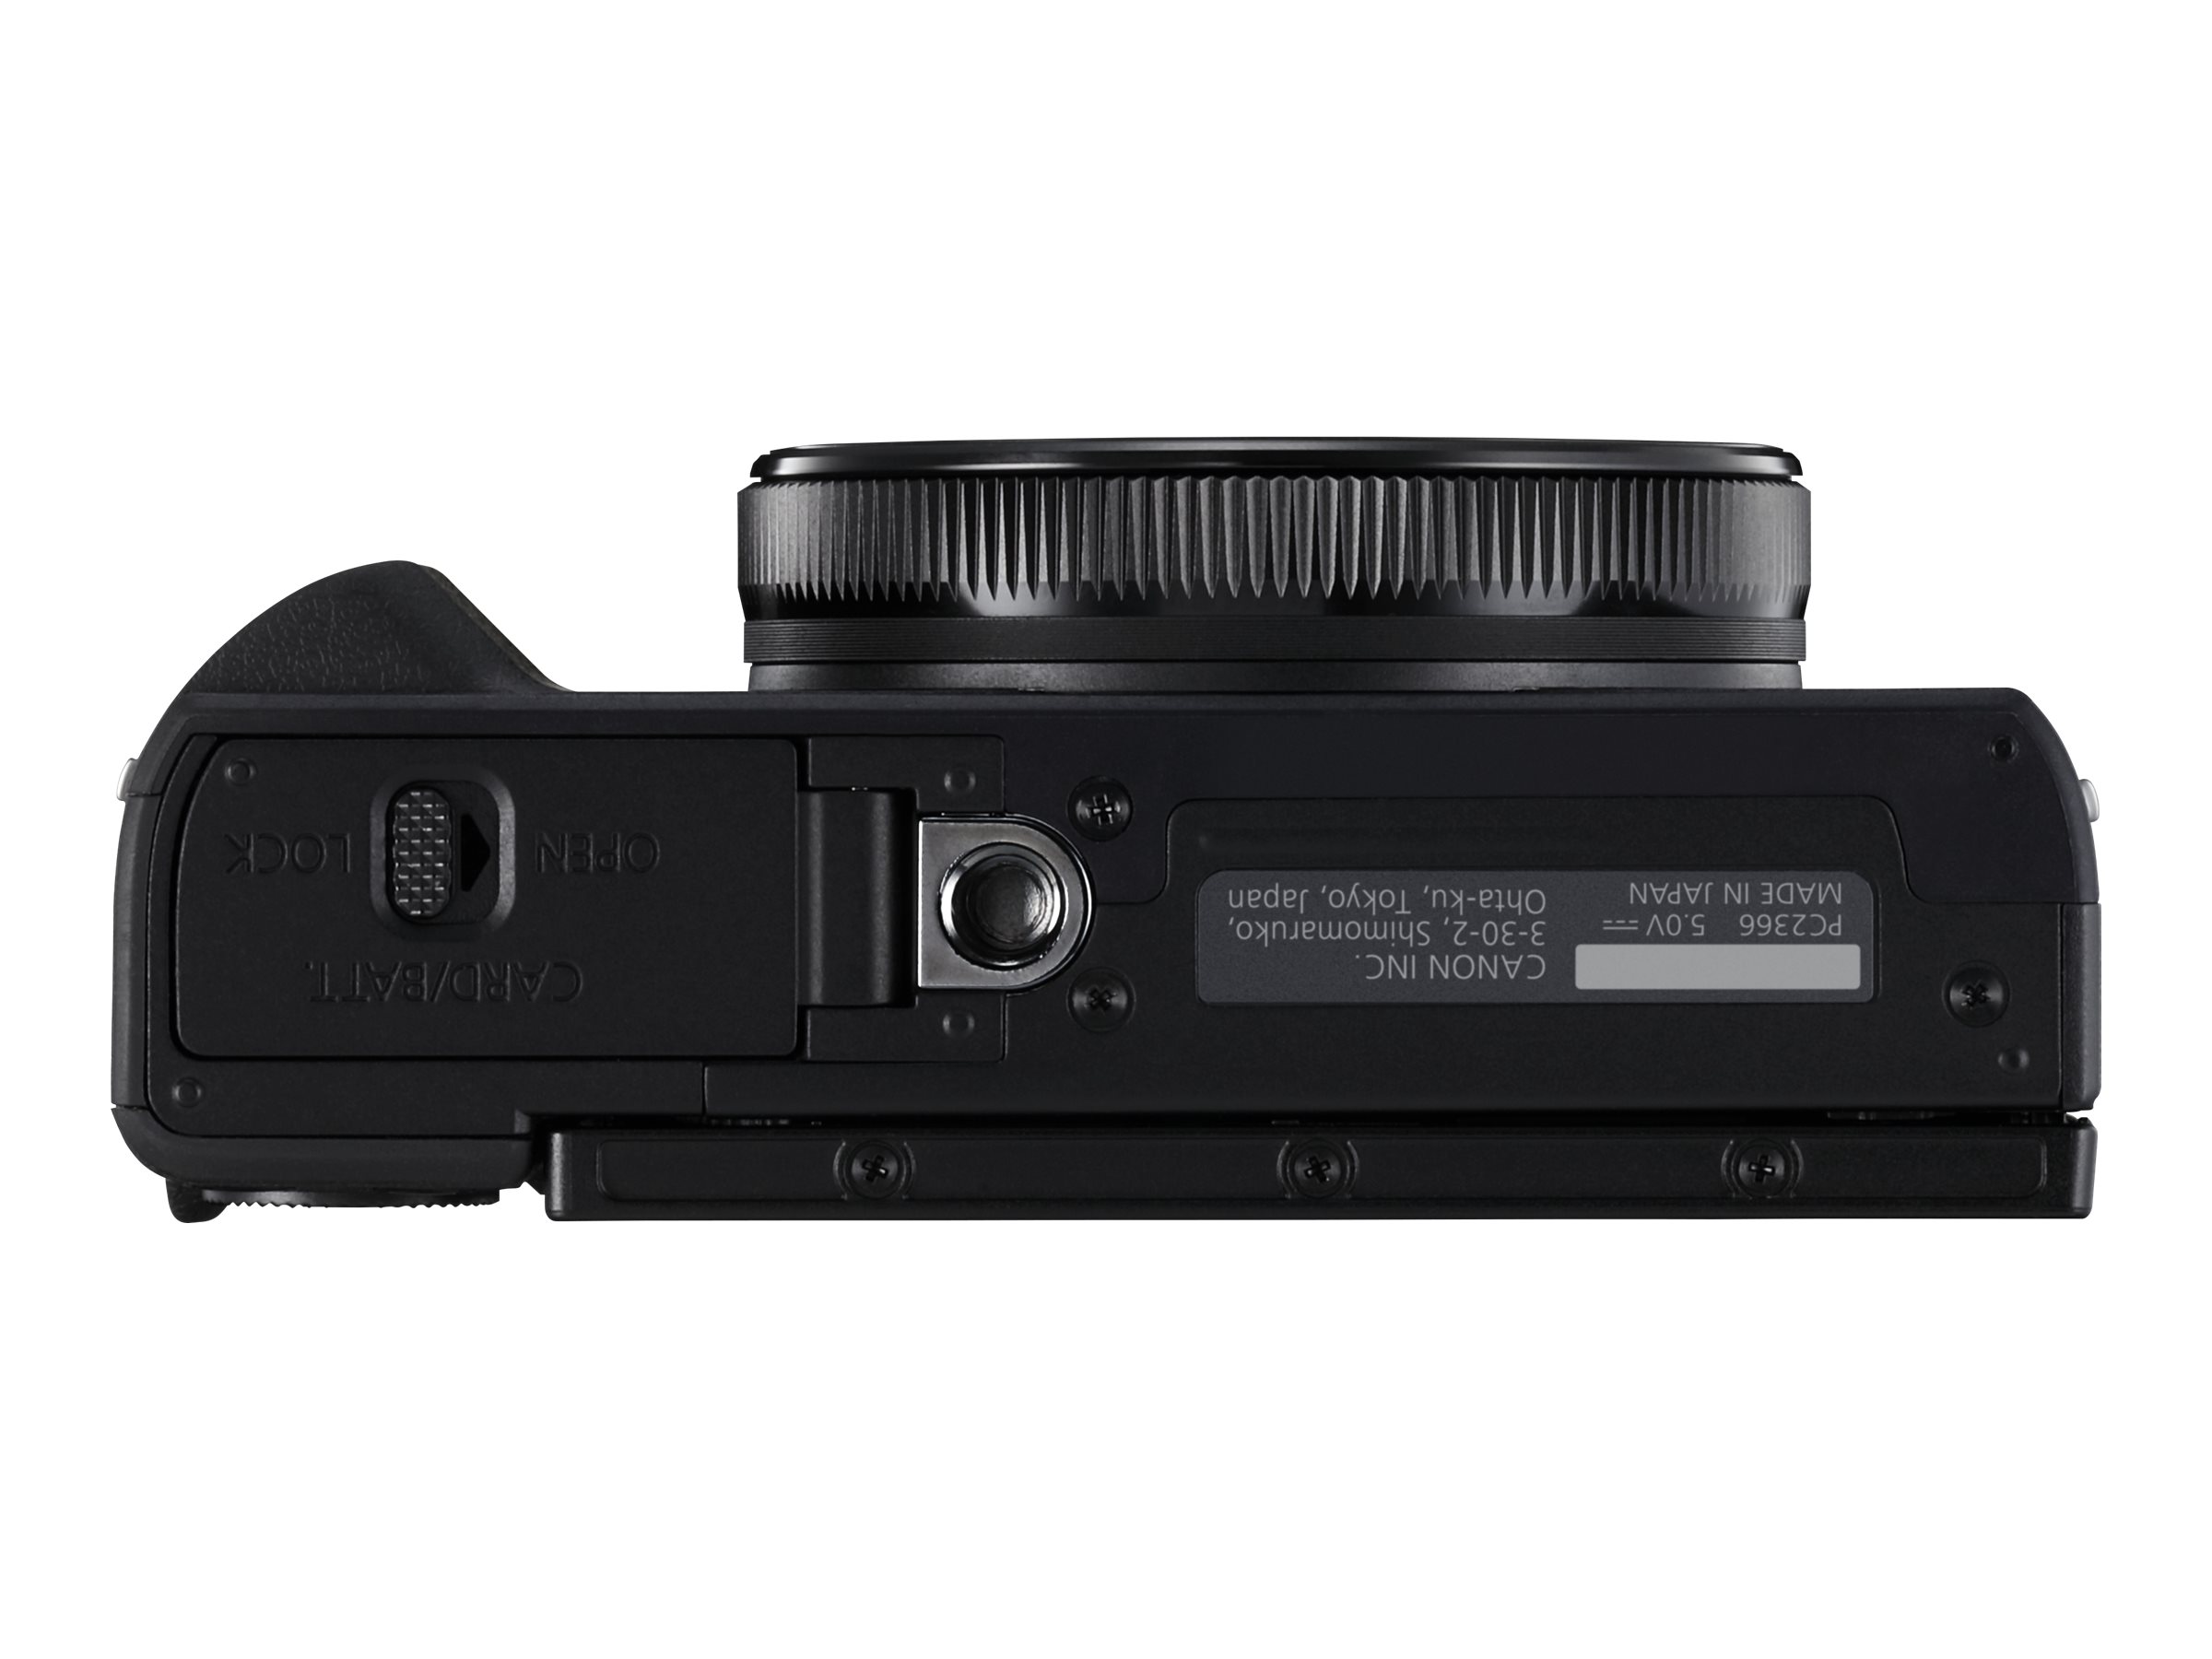 Canon PowerShot G7 X Mark III - Digitalkamera